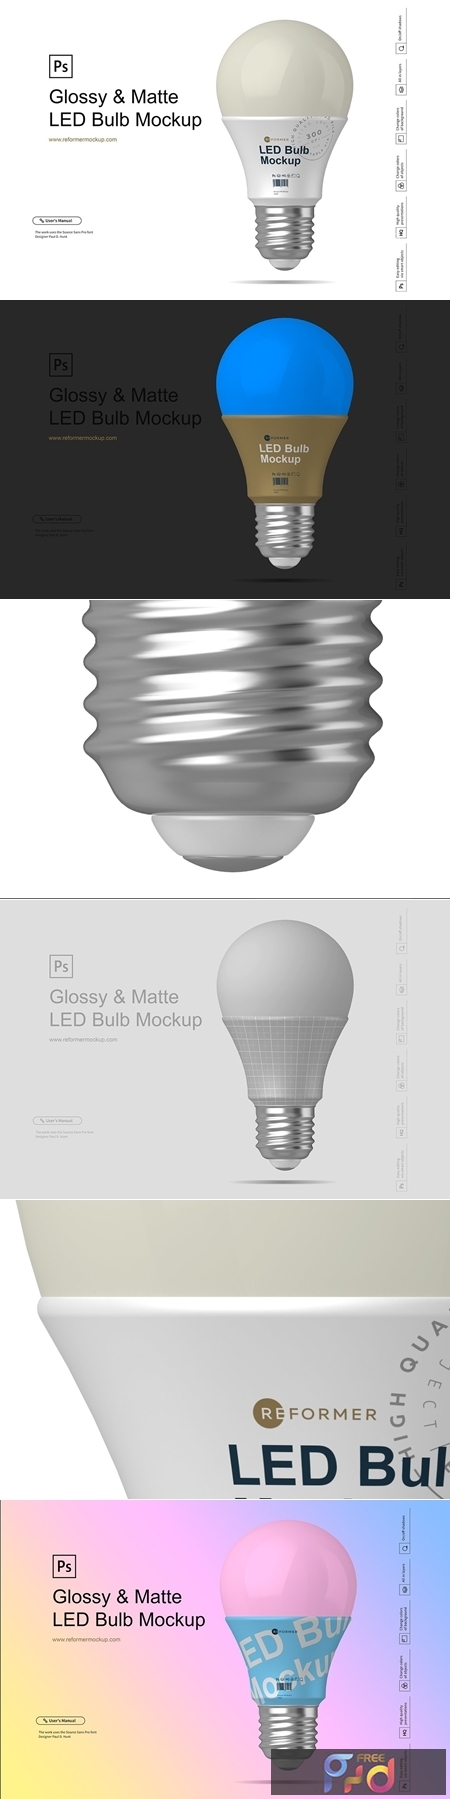 Download Glossy & Matte LED Bulb Mockup 4169906 - FreePSDvn